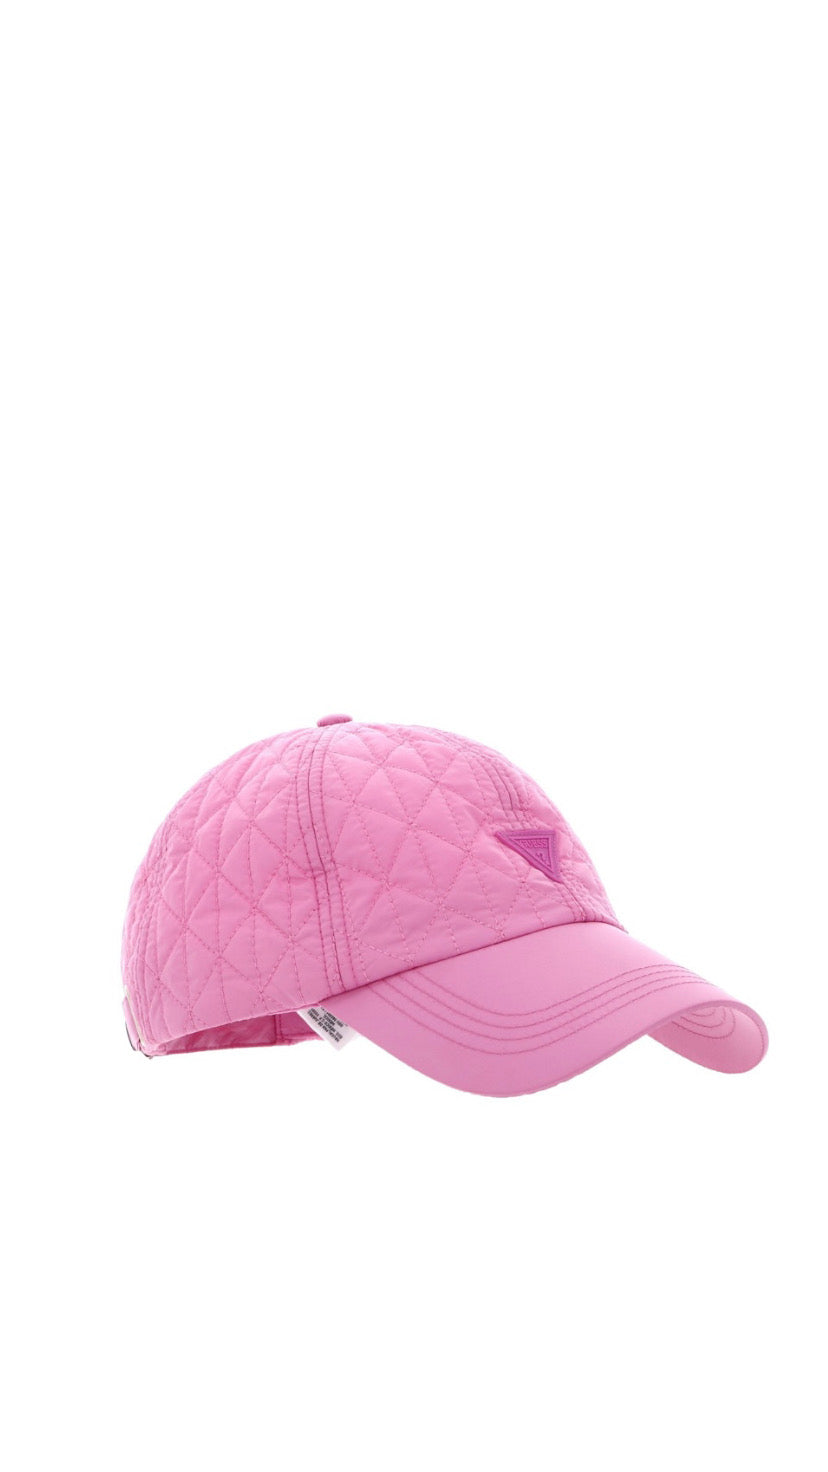 Aw5071 guess pink baseball hat